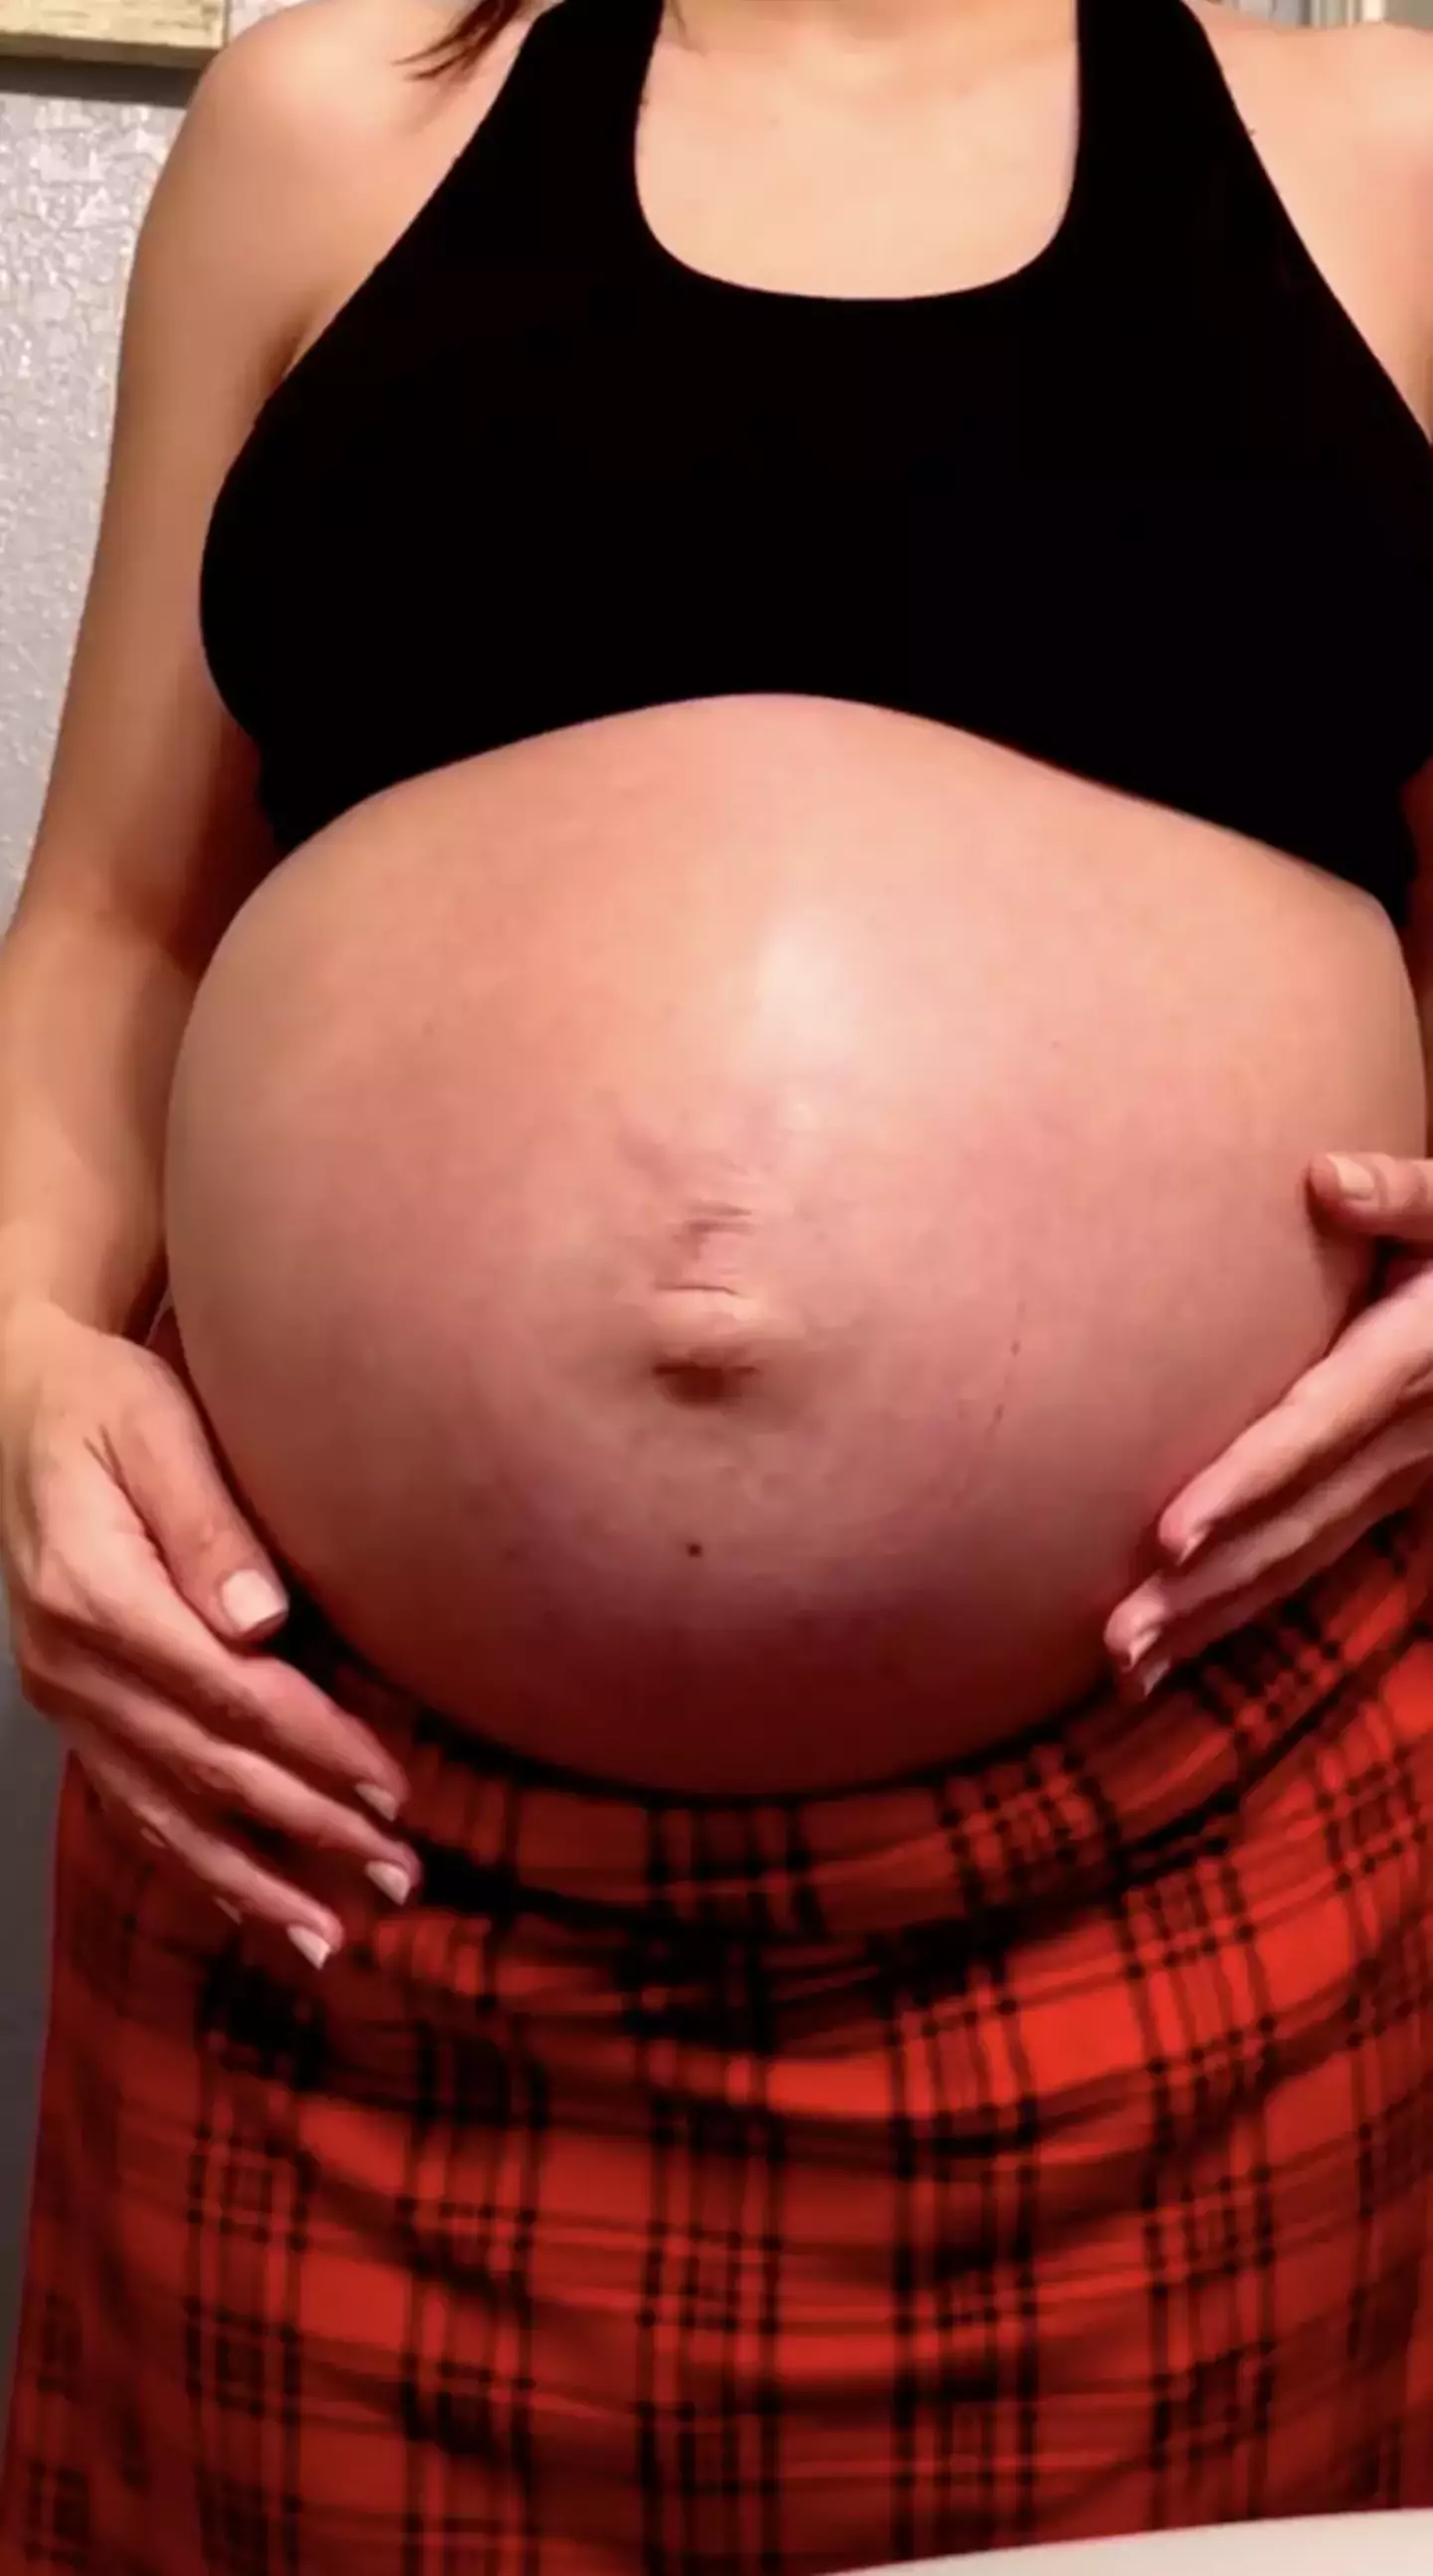 Rose Valencia captured the incredible pregnancy milestone on camera.